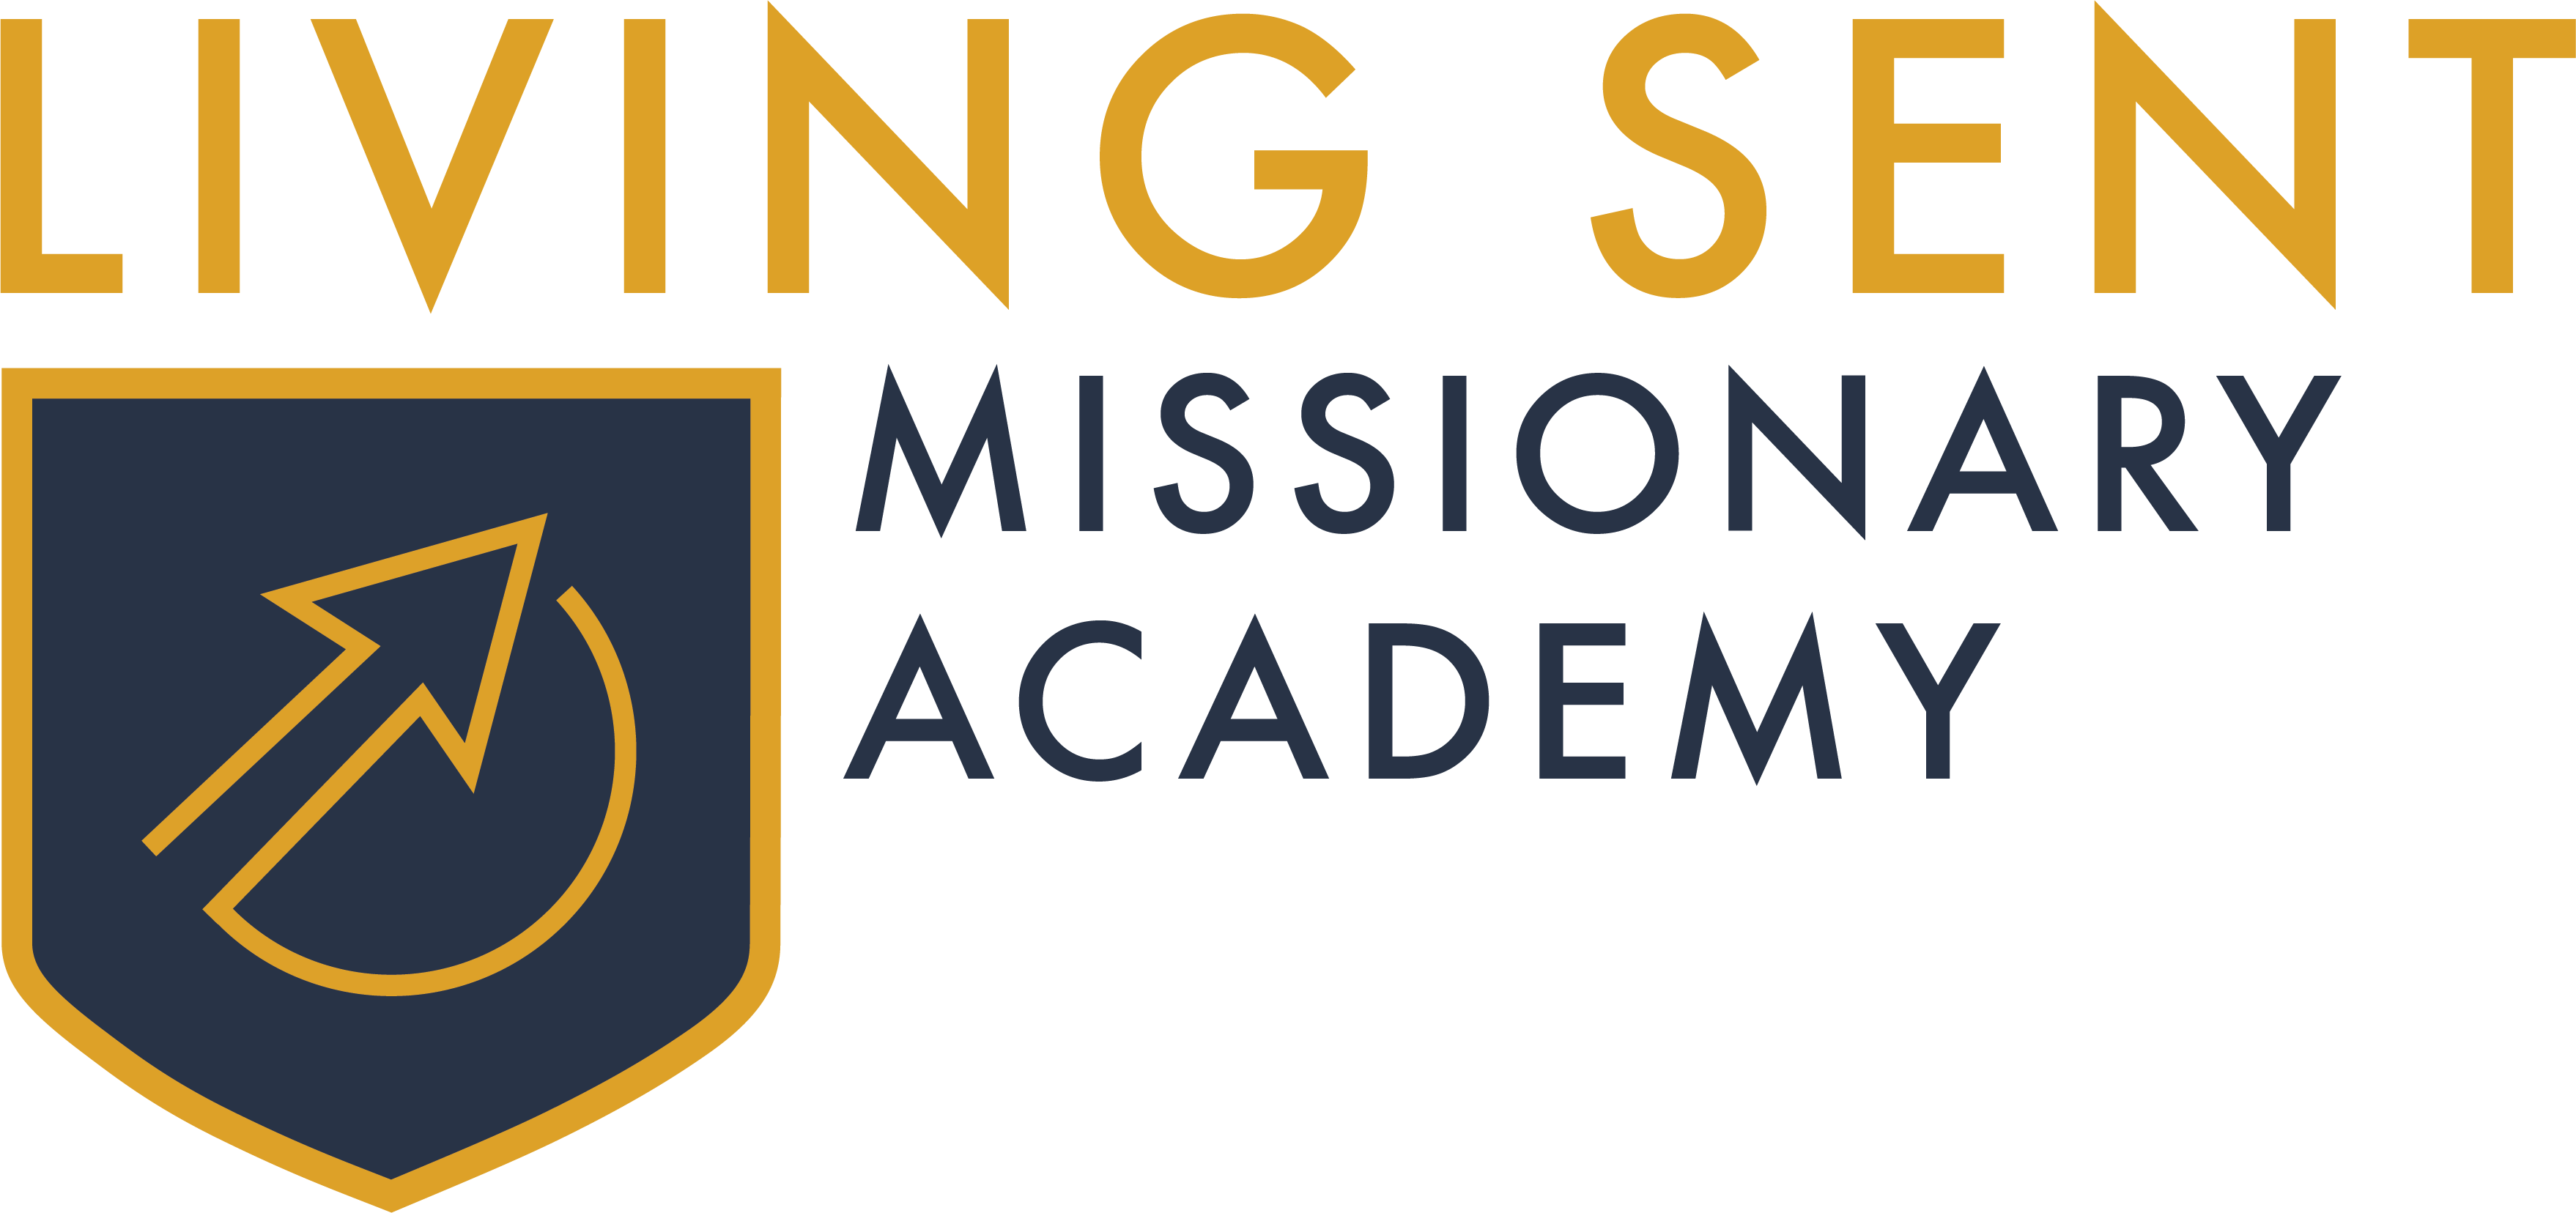 Living Sent Missionary Academy